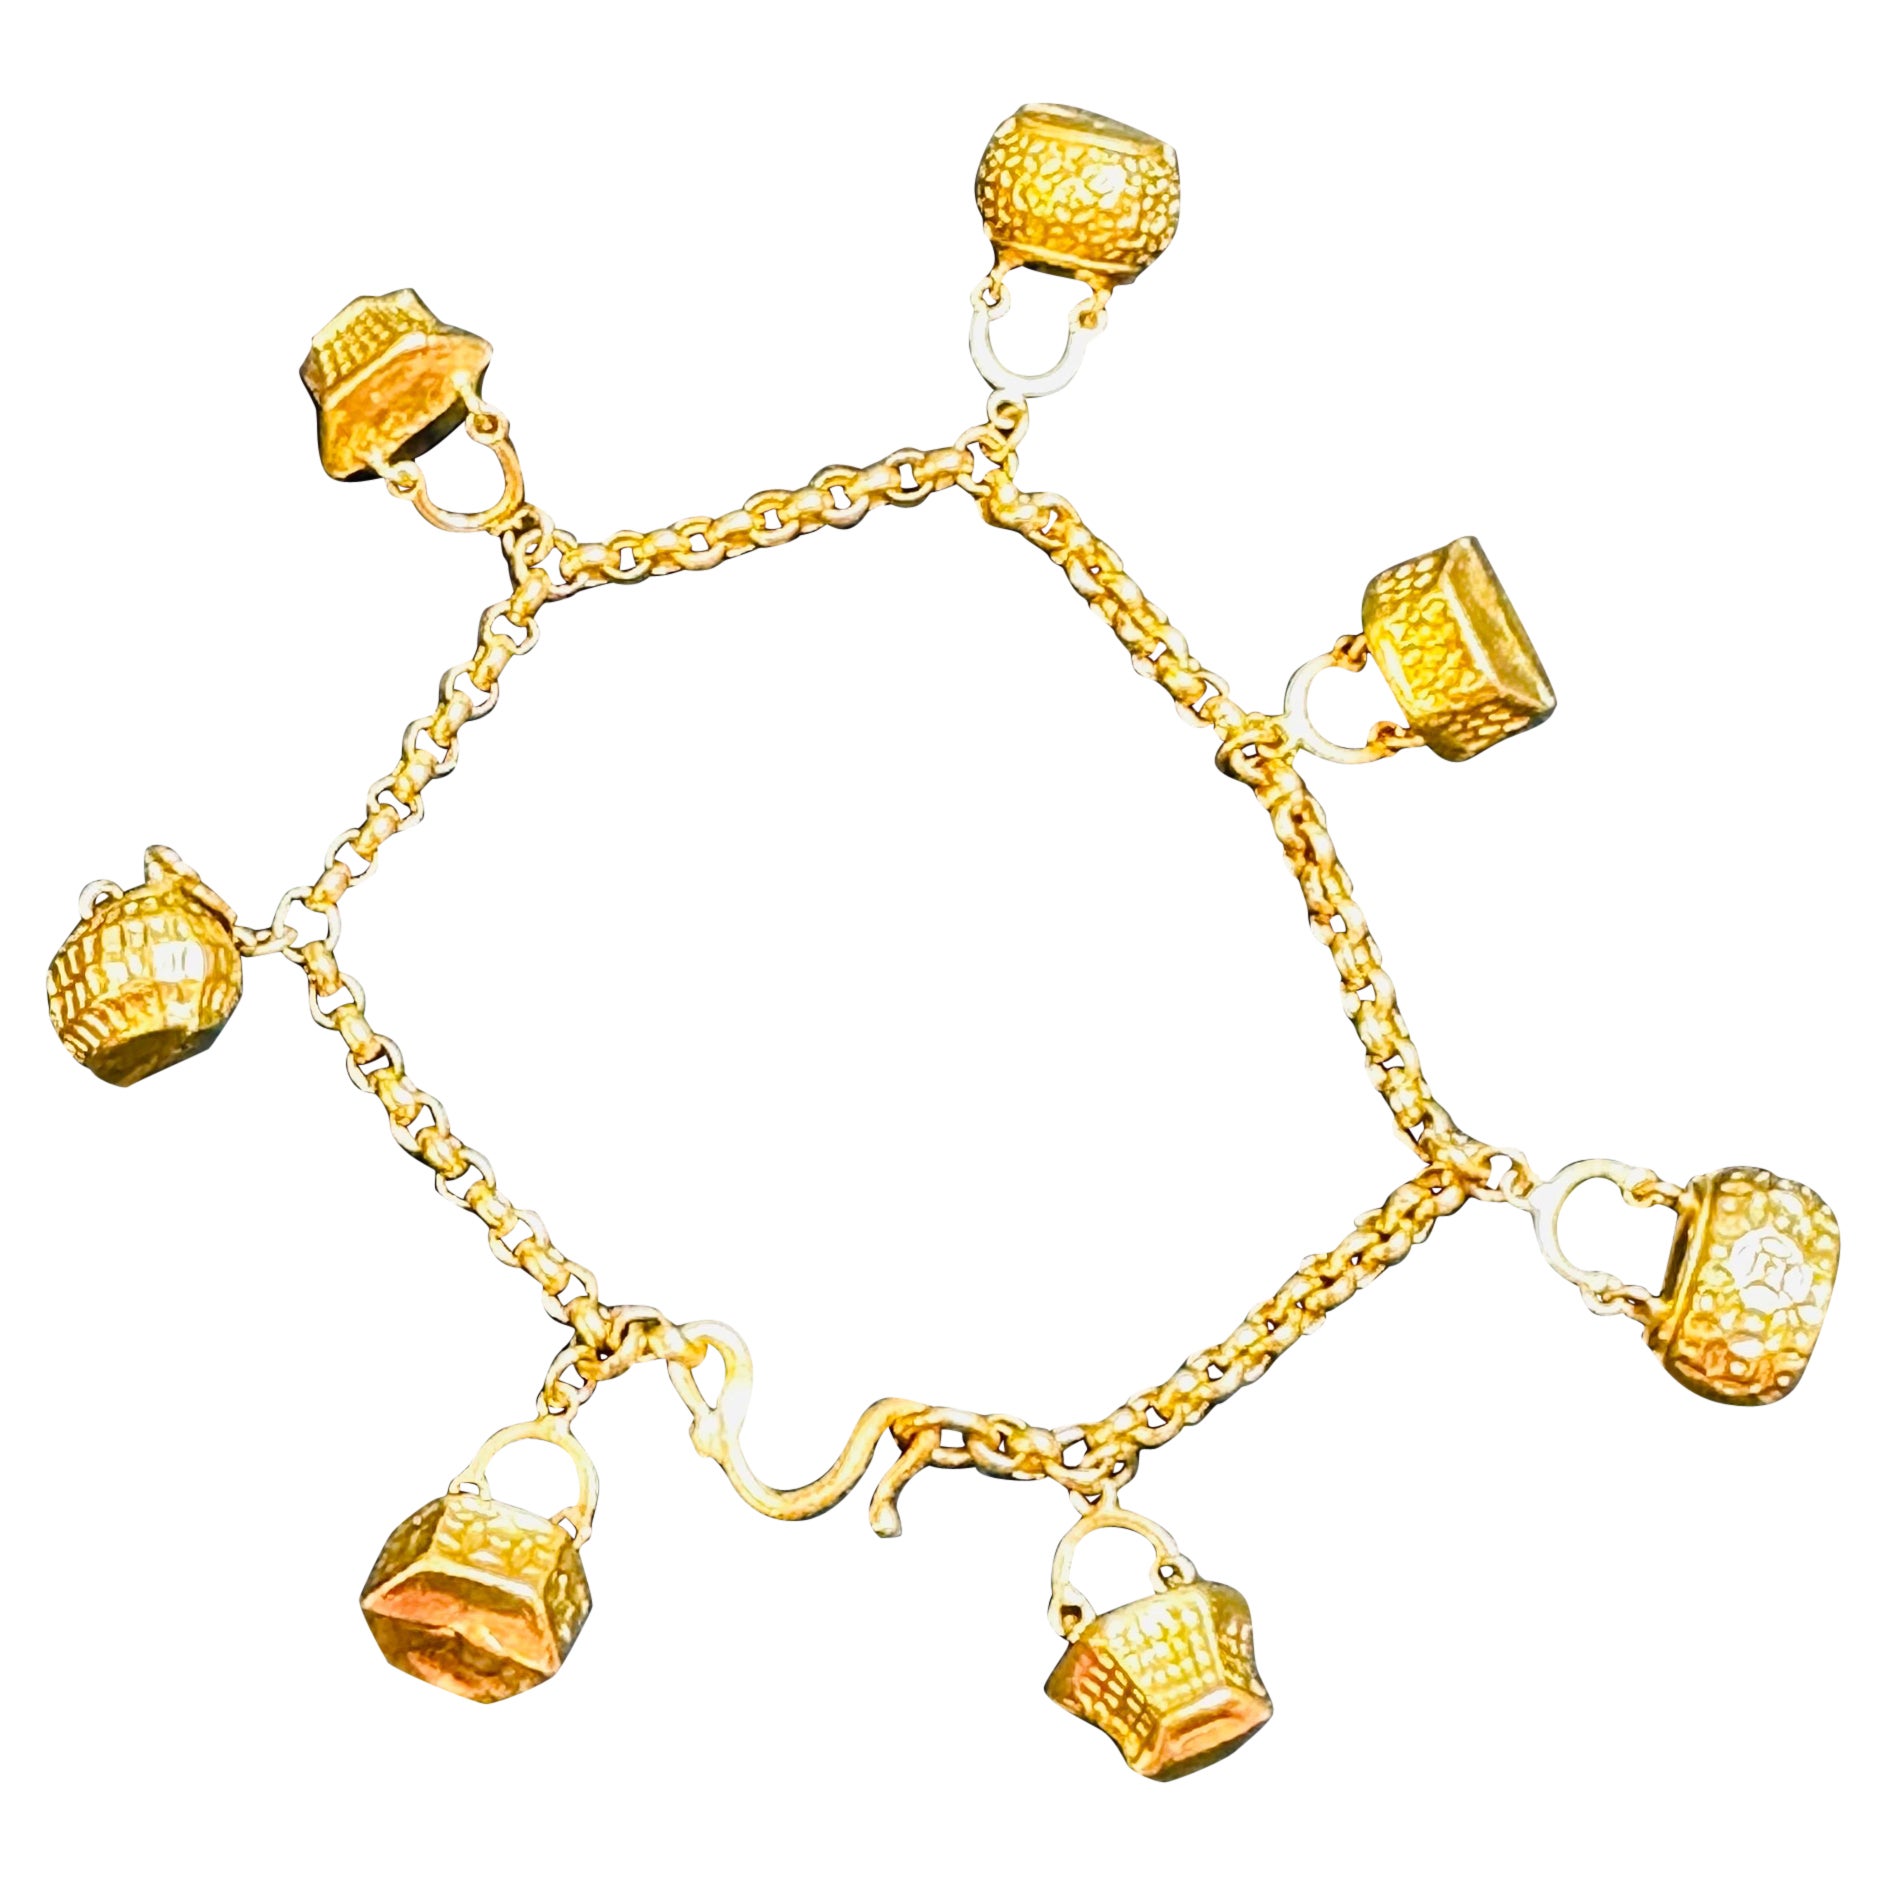 24 Karat Yellow Pure Gold 15.5 Gm Charm Bracelet with 7 Basket Charms